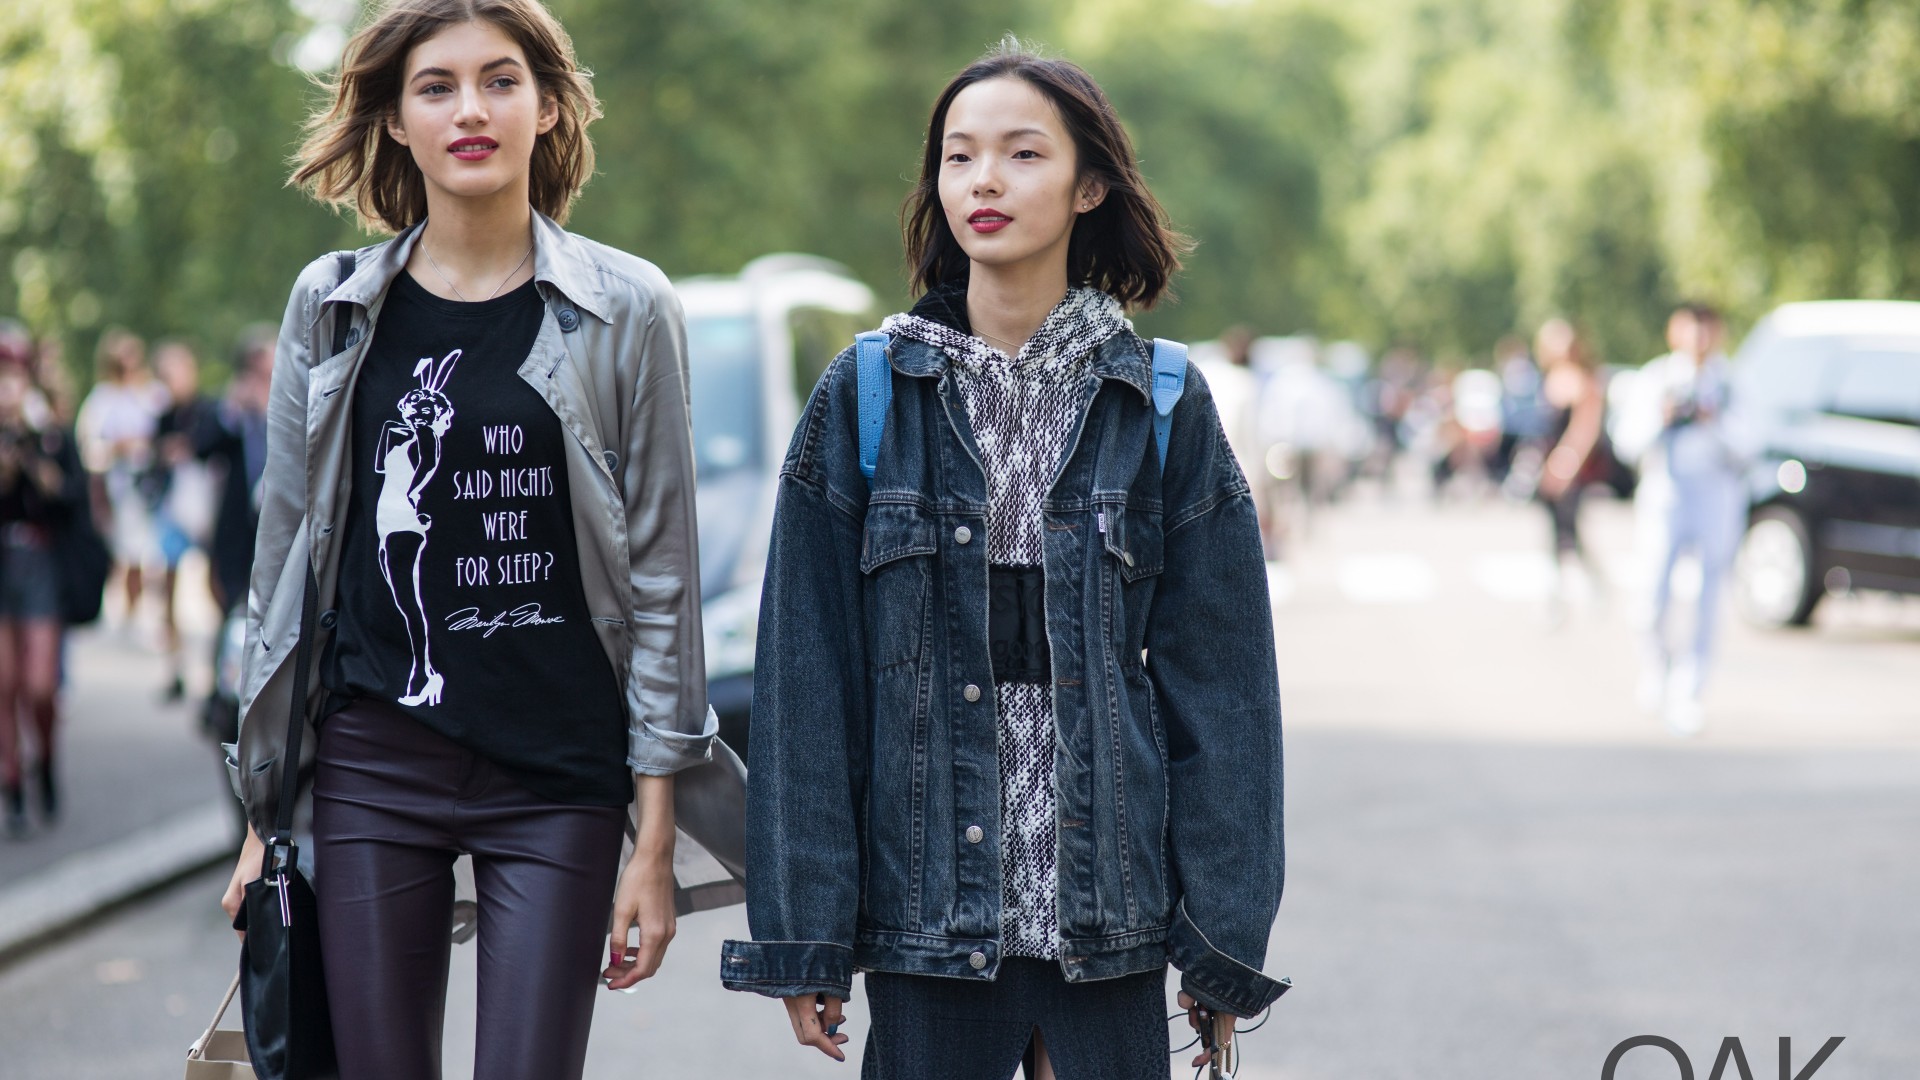 Valery Kaufman, Xiao Wen Ju, Top Fashion Models 2015, model, smile, street (horizontal)